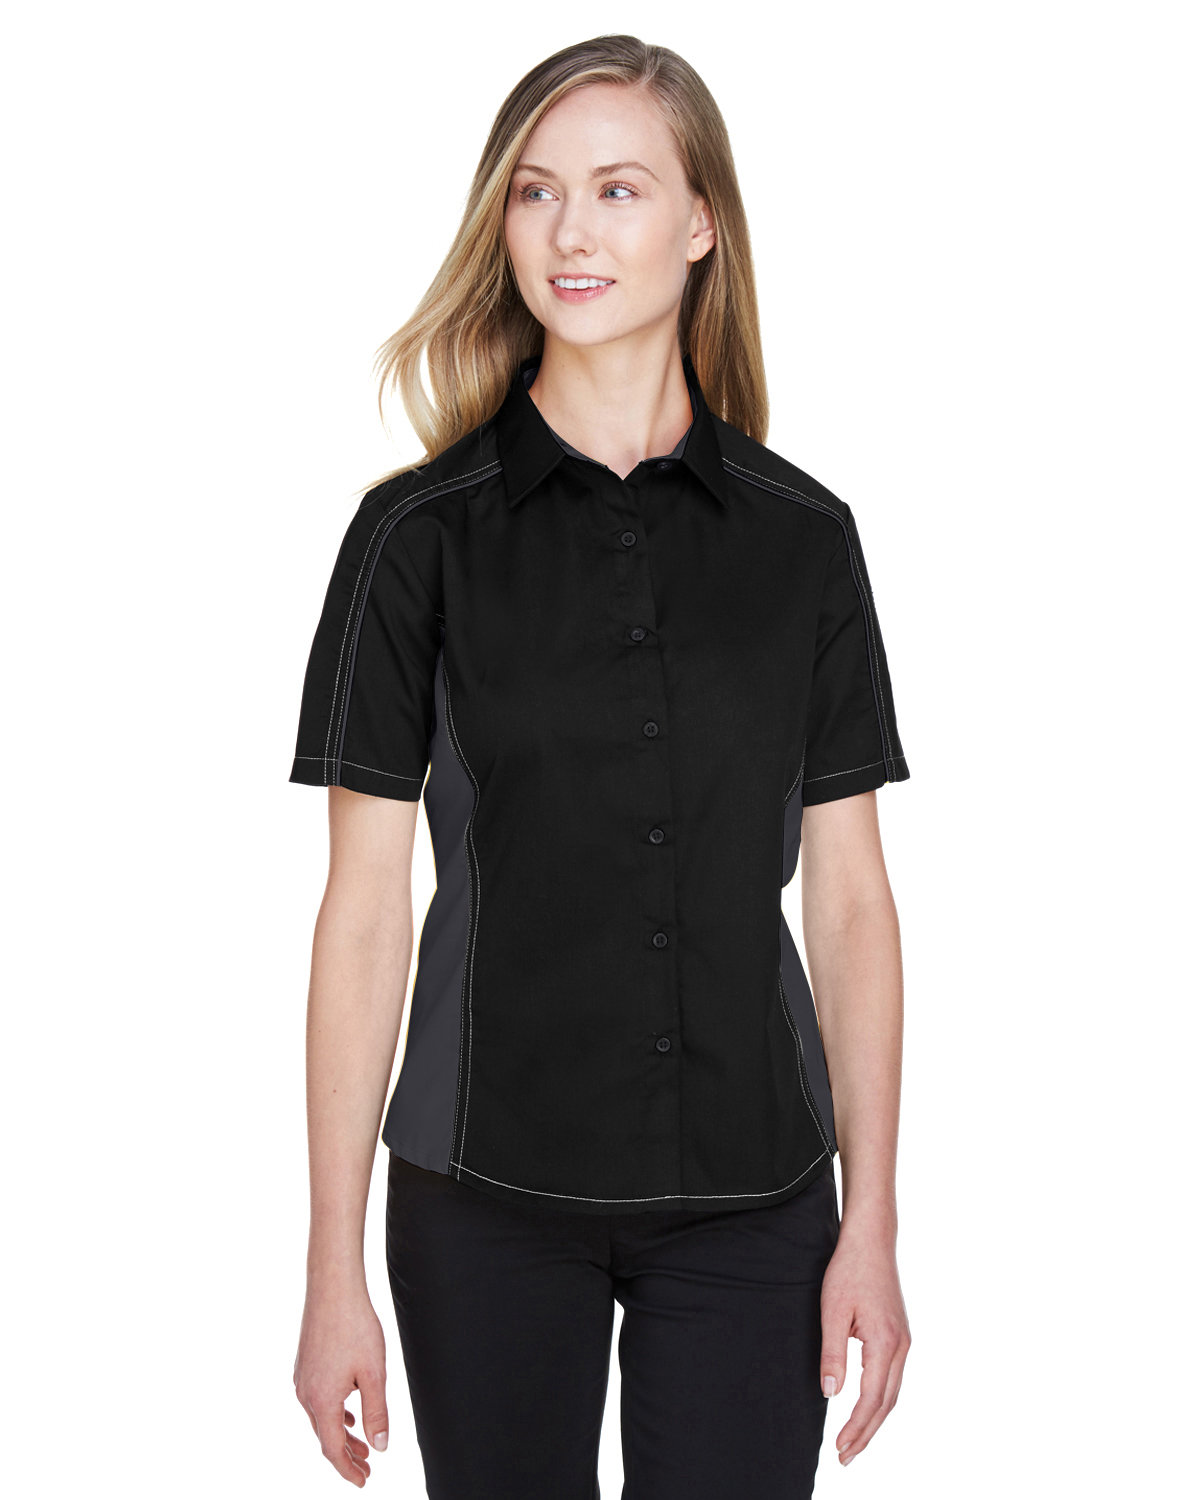 North End Ladies' Fuse Colorblock Twill Shirt BLACK/ CARBON 